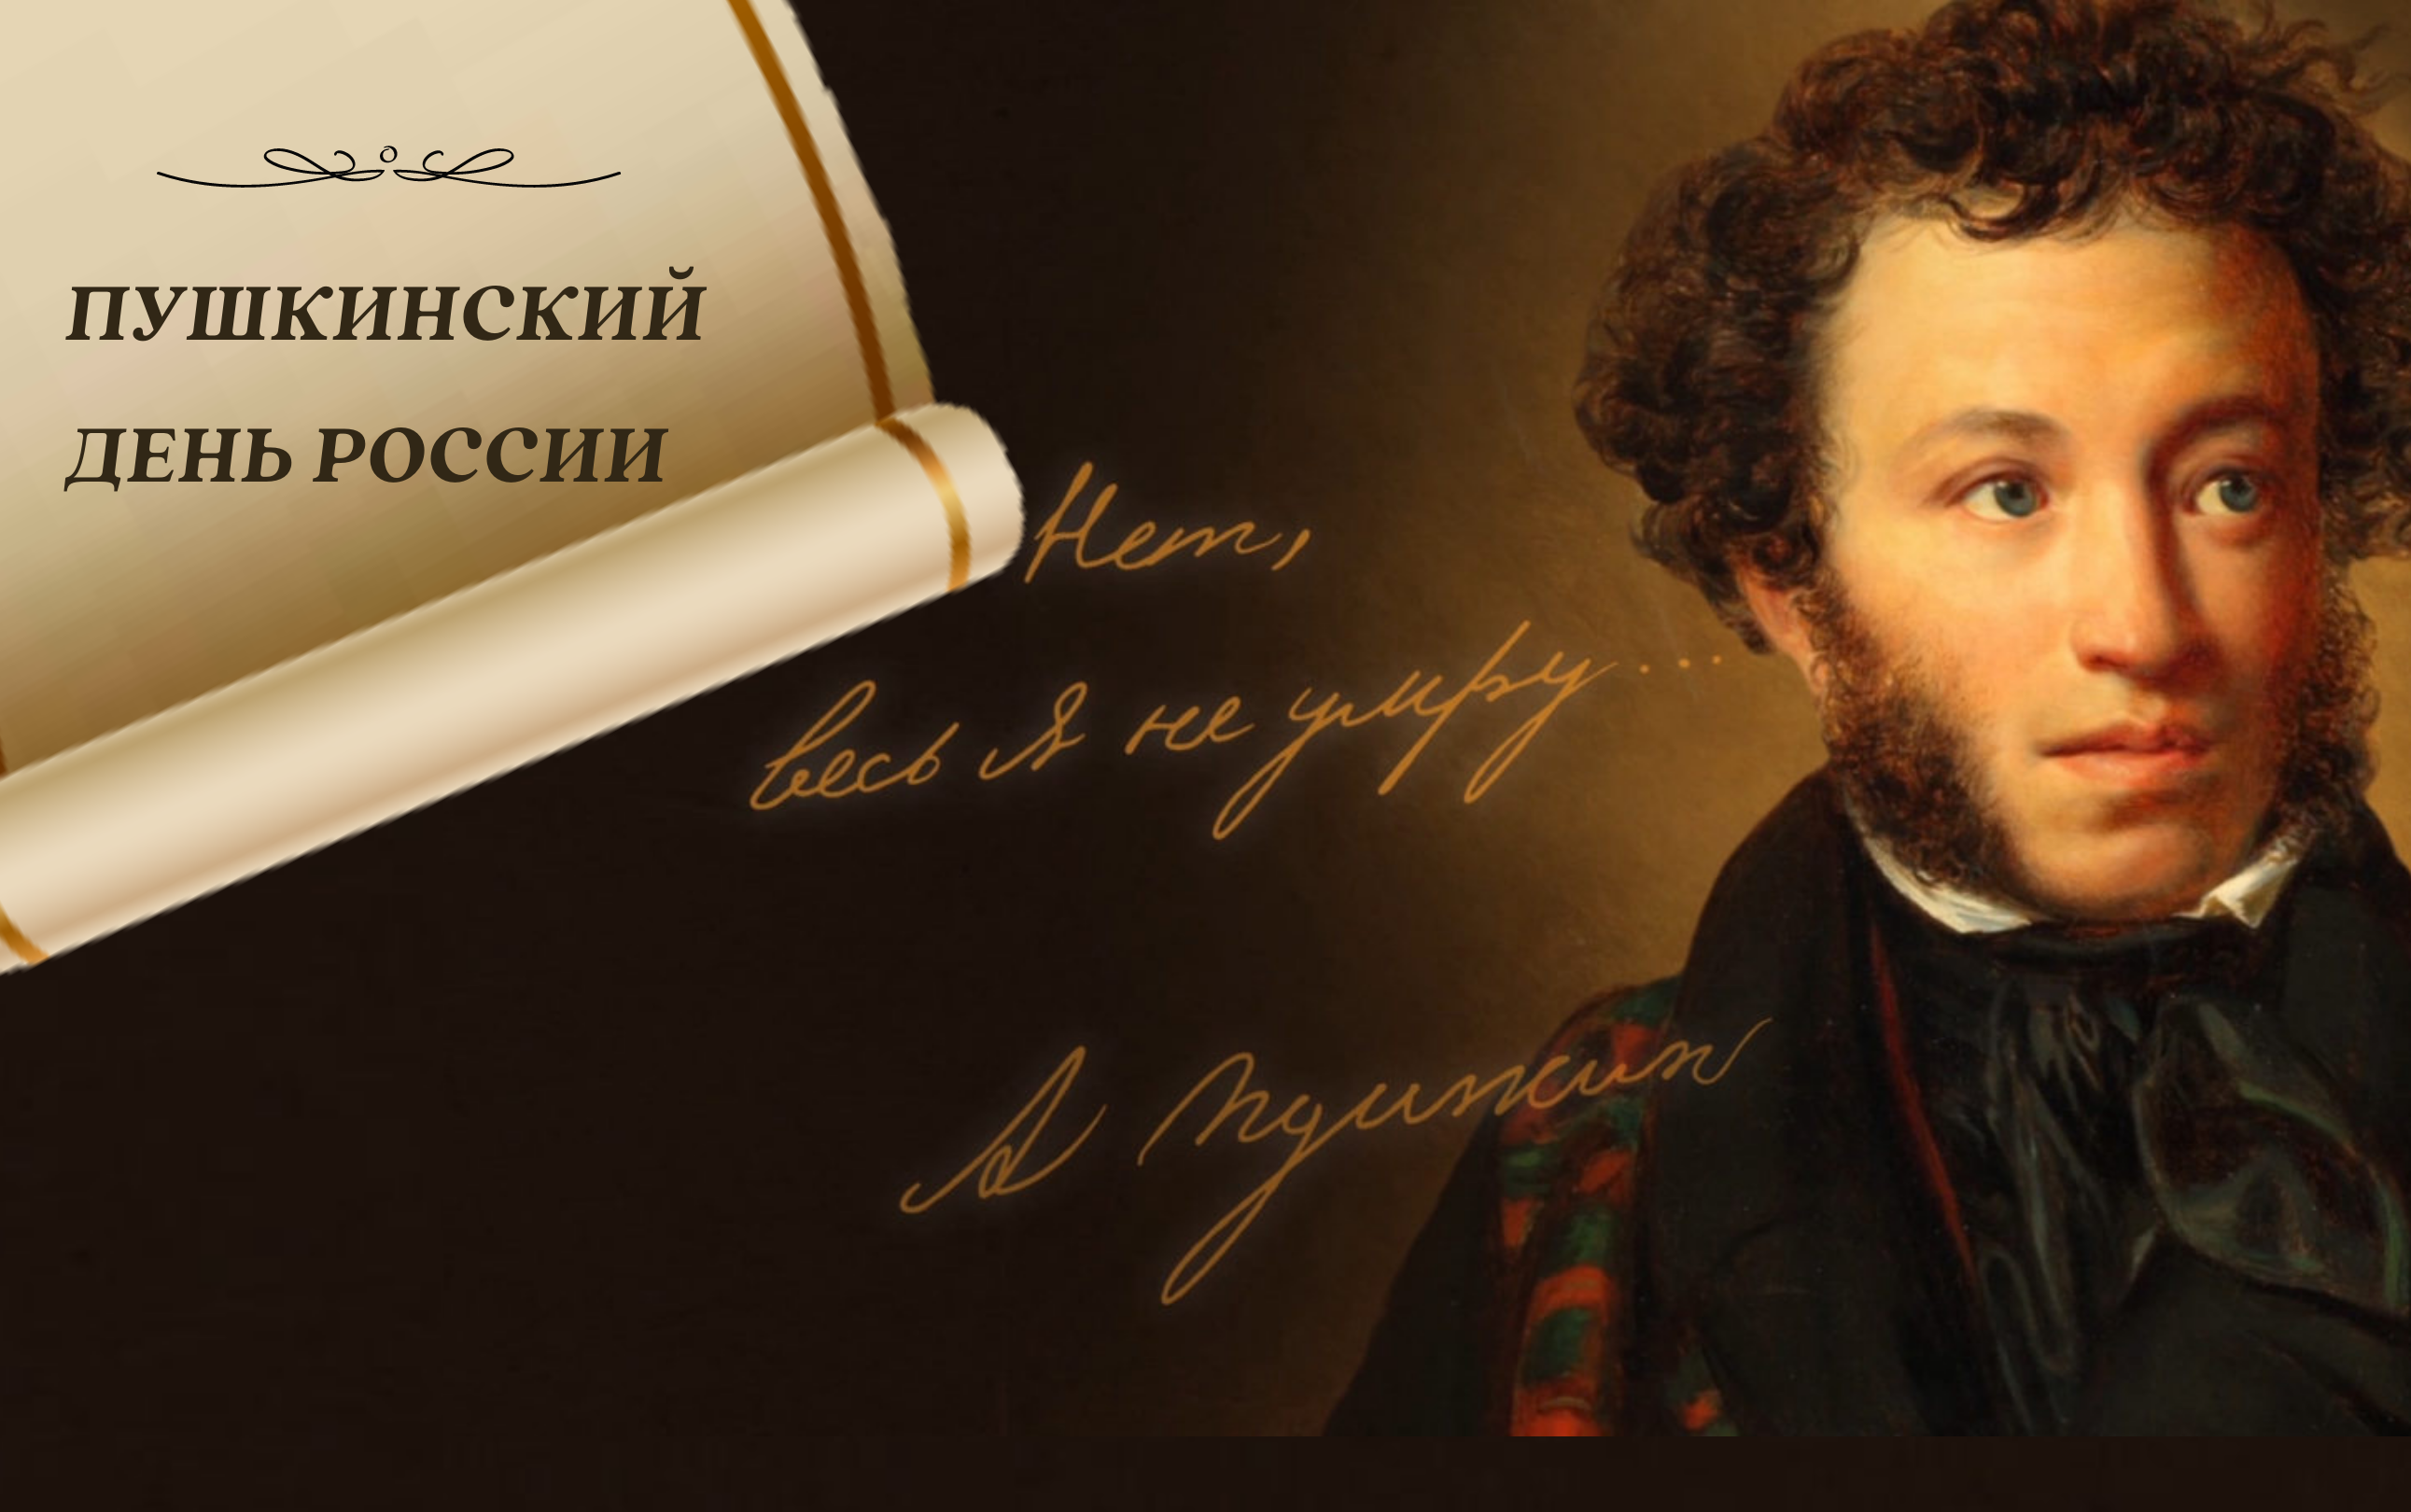 Пушкин 6 июня. Чем важен день 6 июня пушкинский день